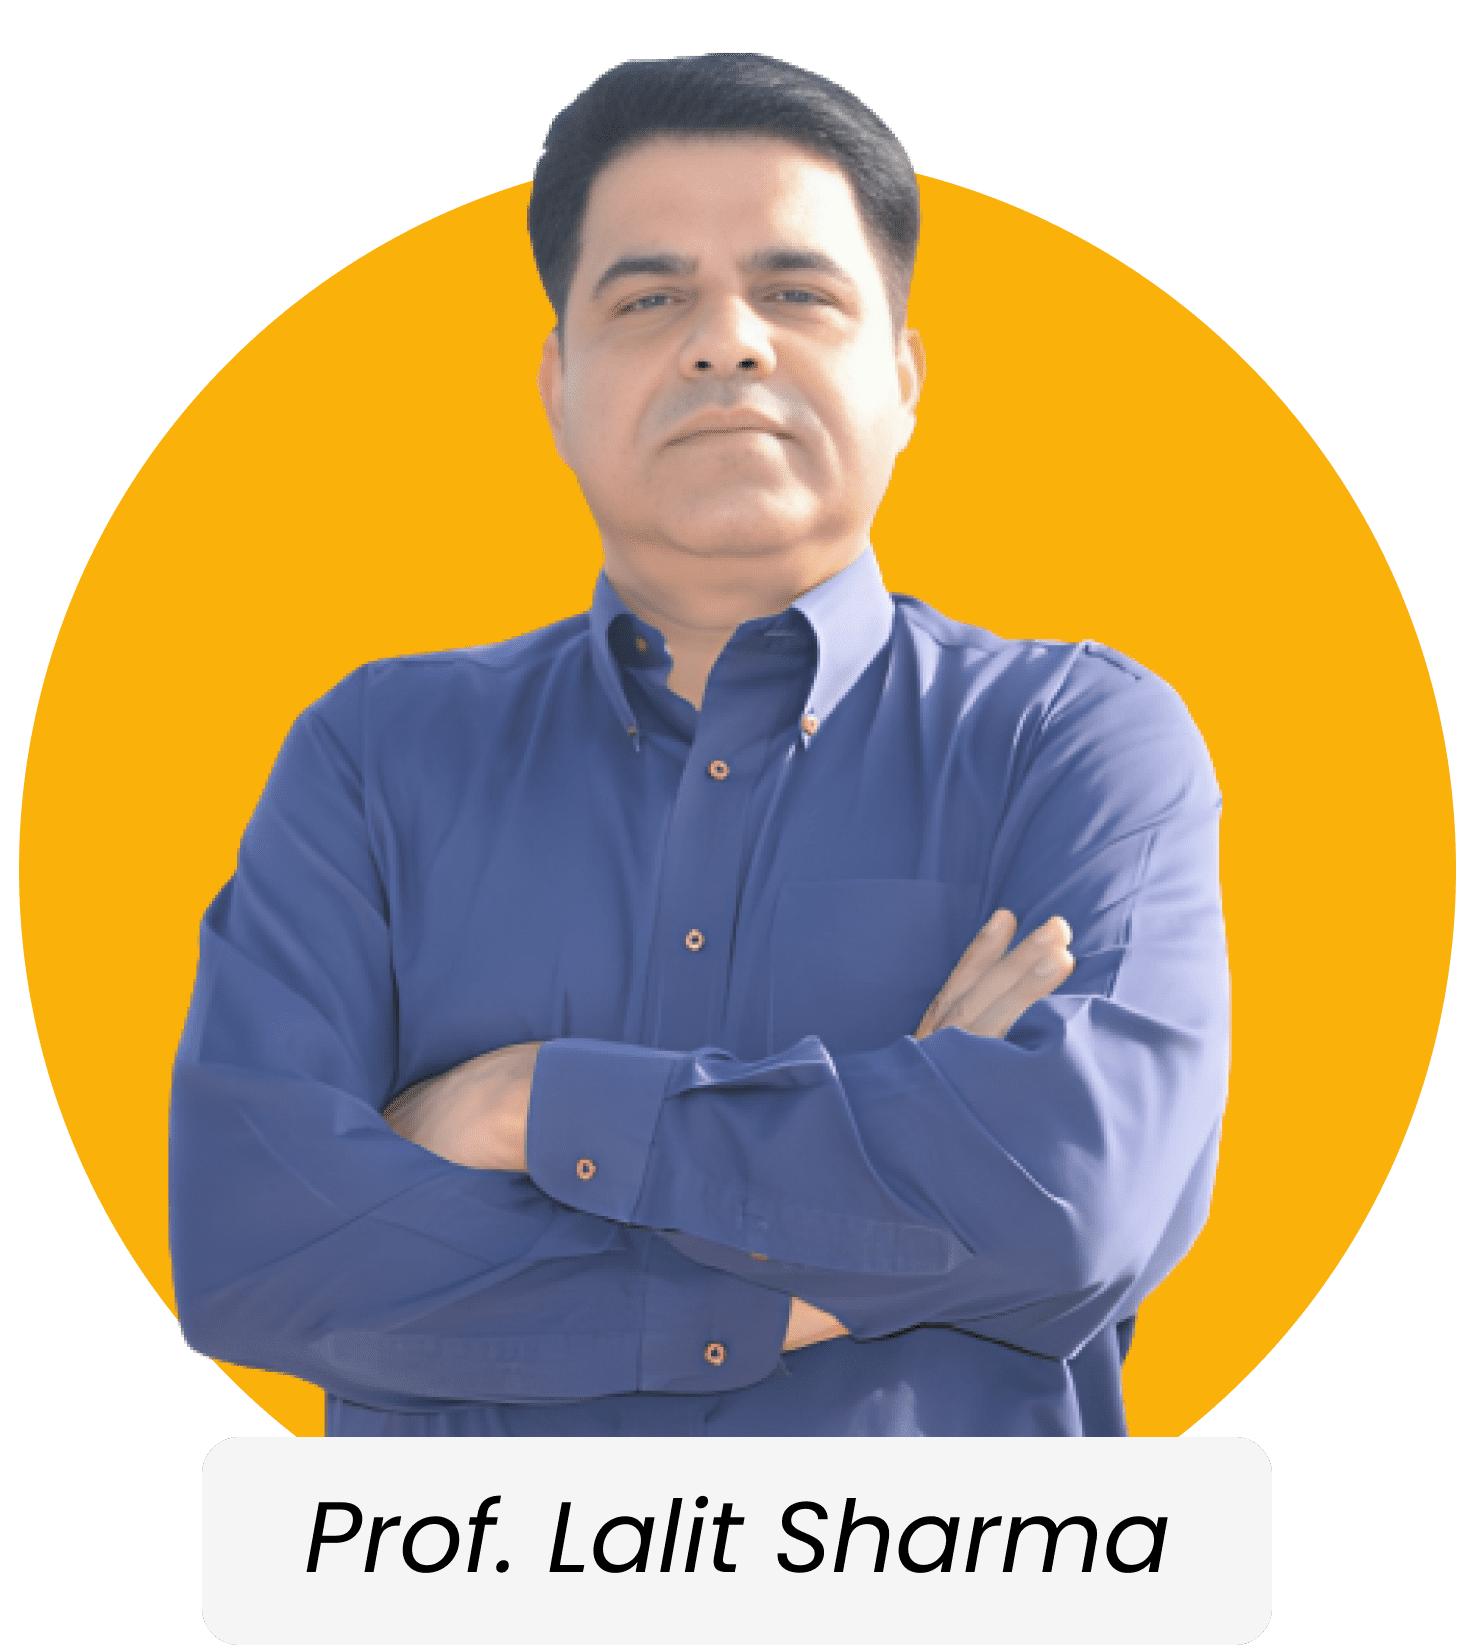 Prof. Lalit Sharma